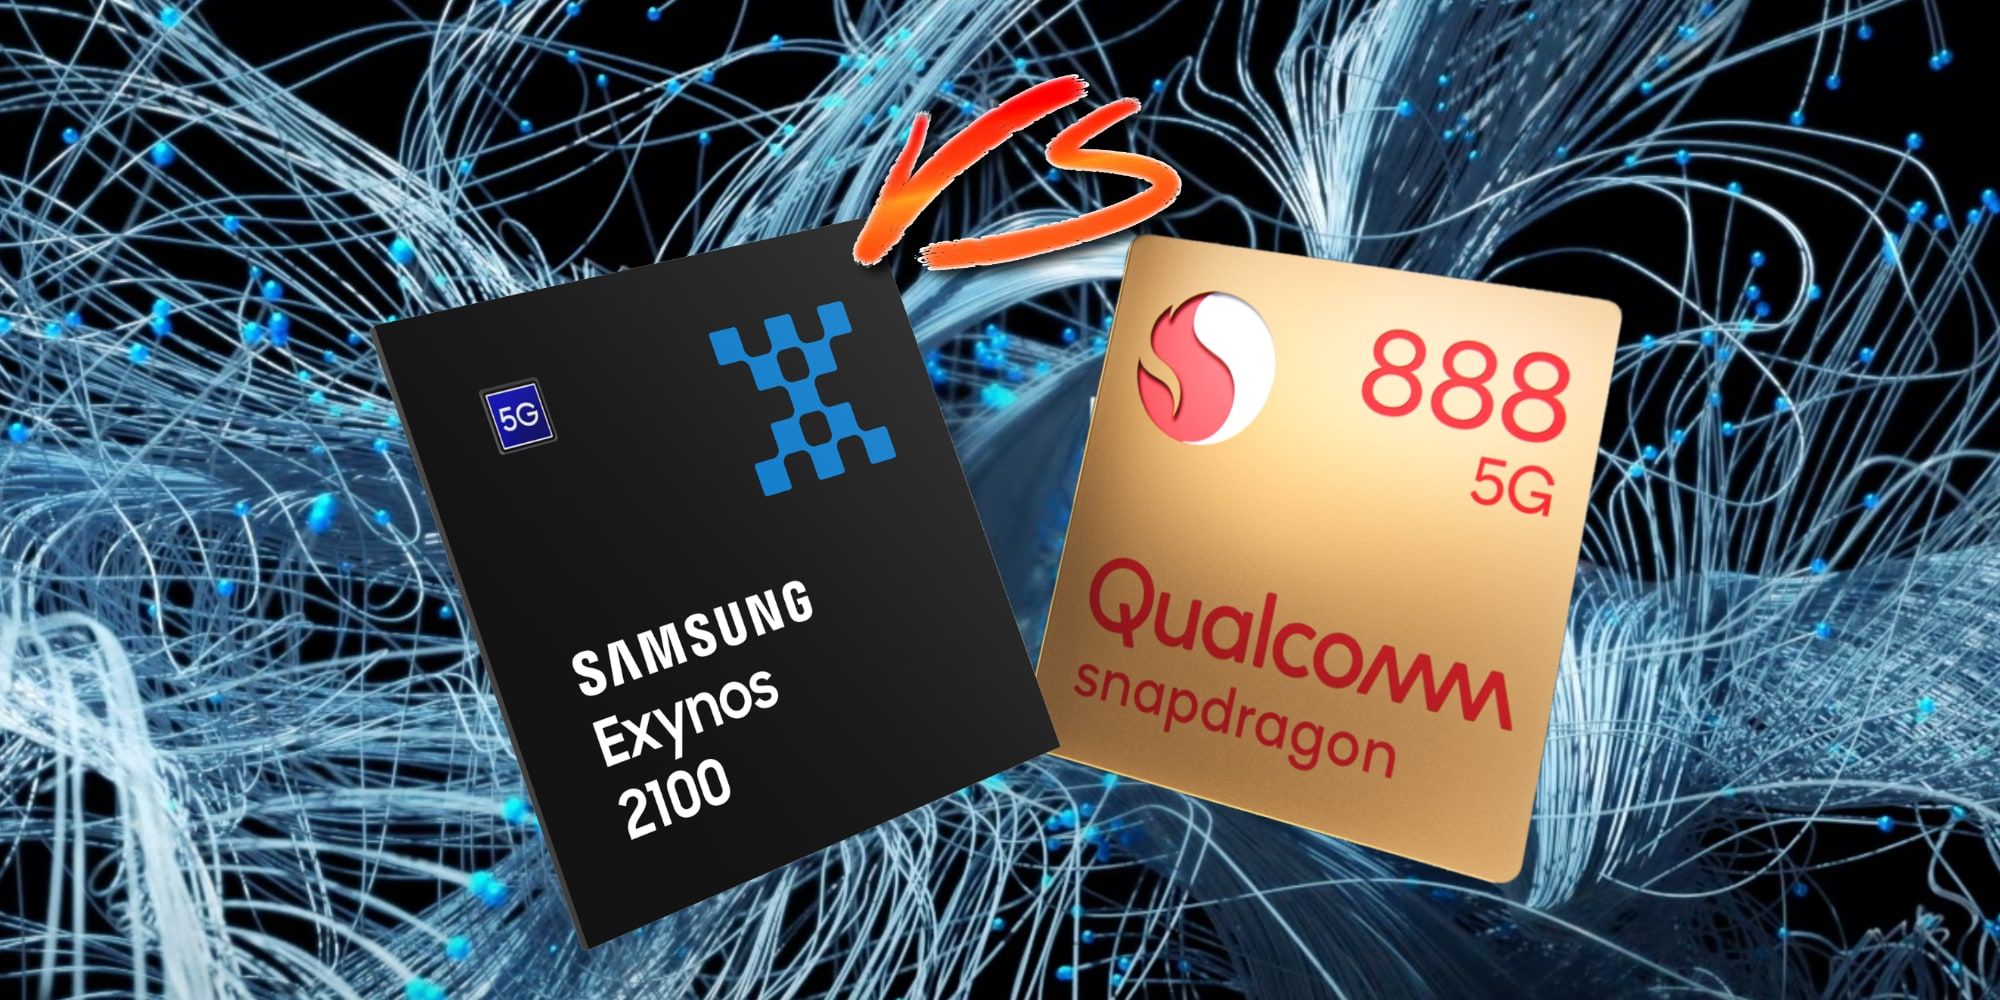 Samsung 2100 Vs Qualcomm Snapdragon 888